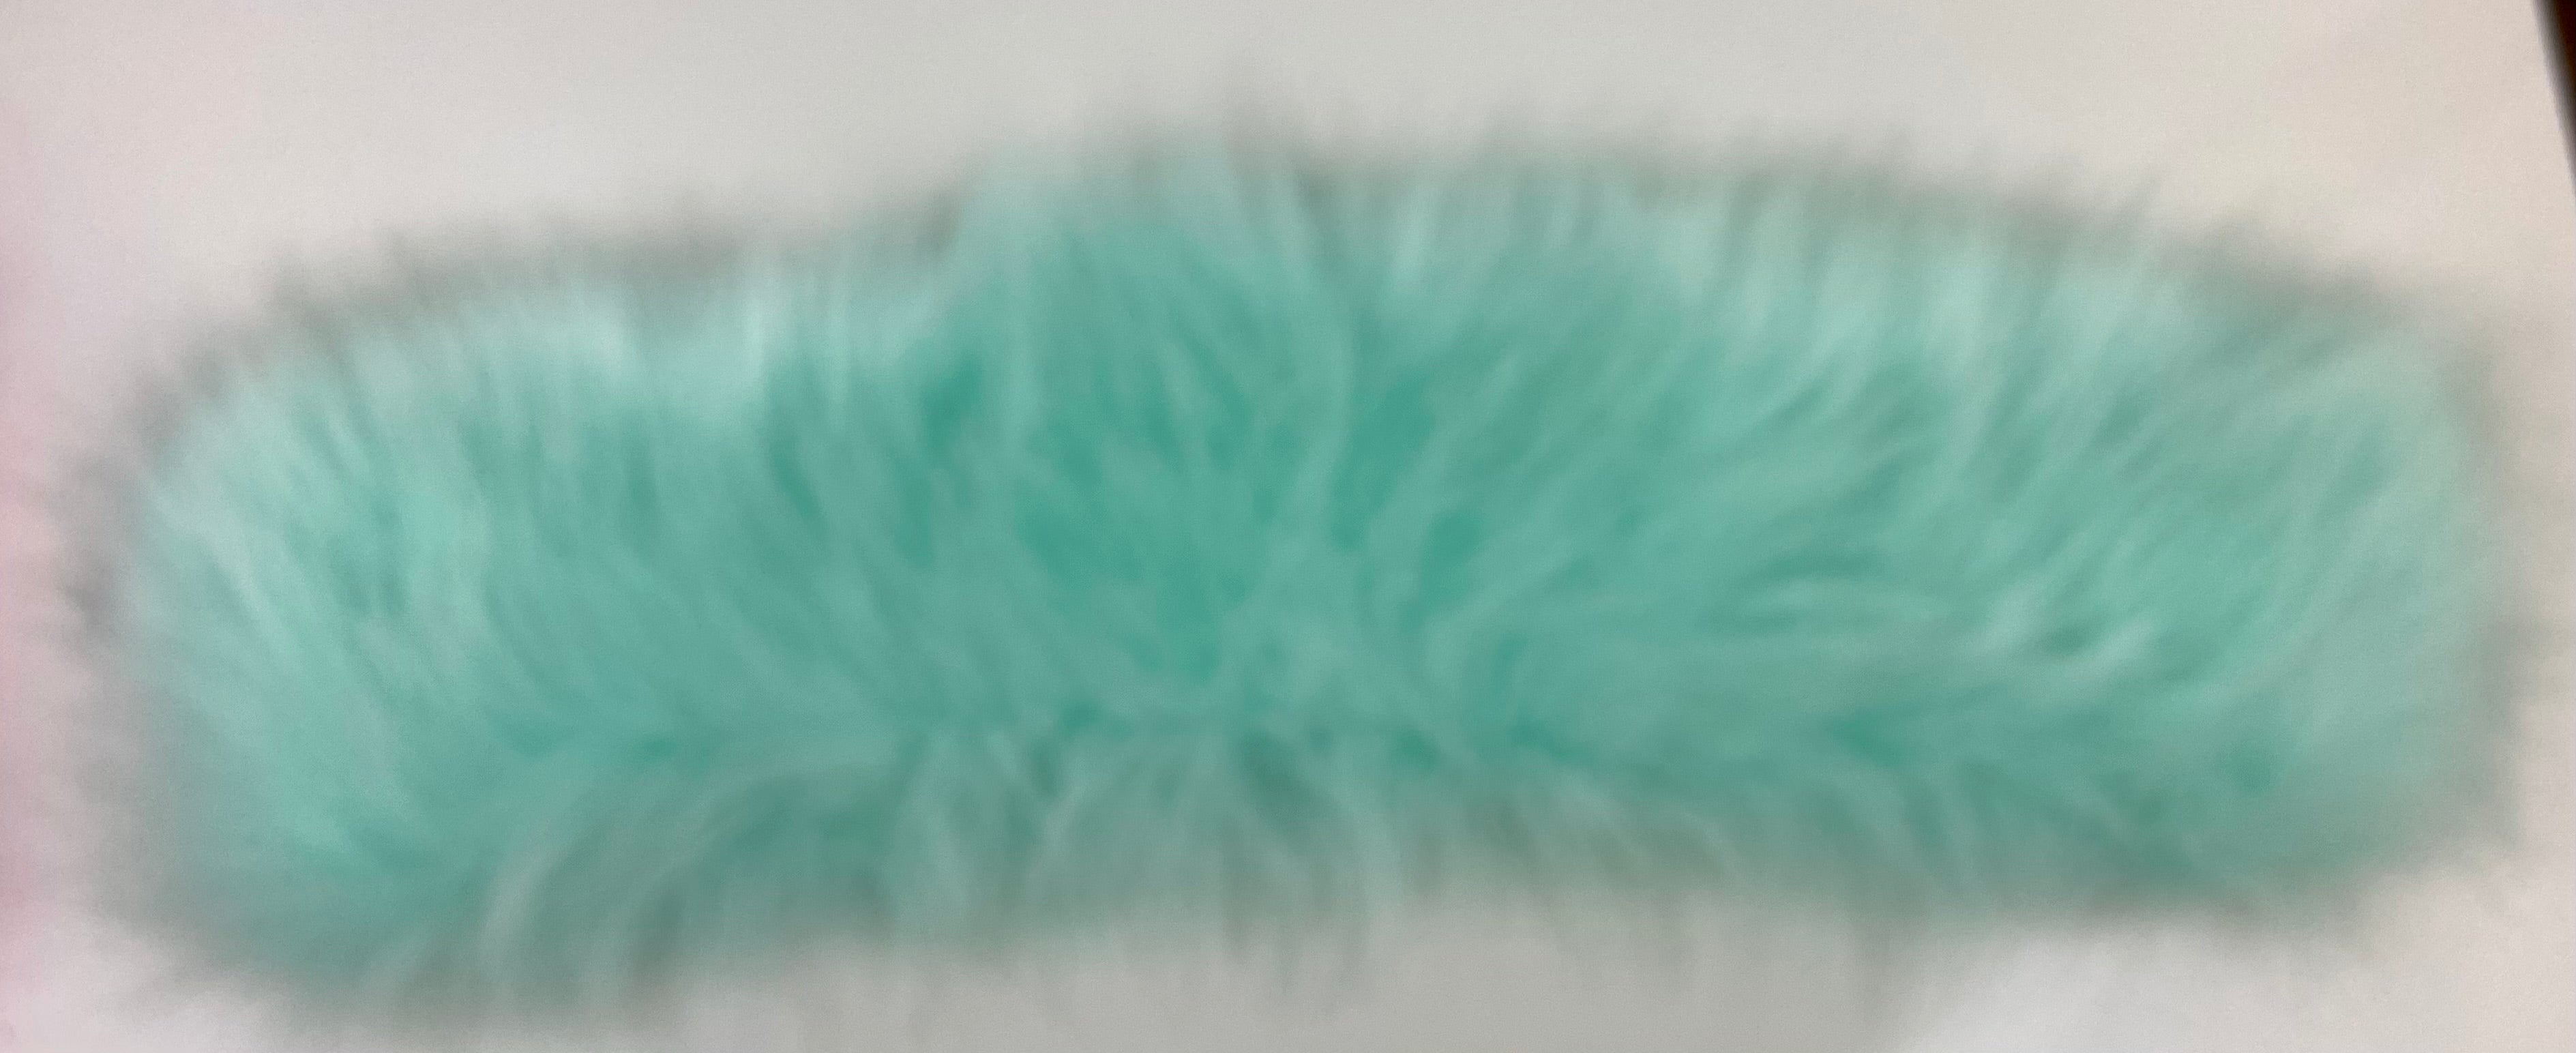 Artificial fur collar